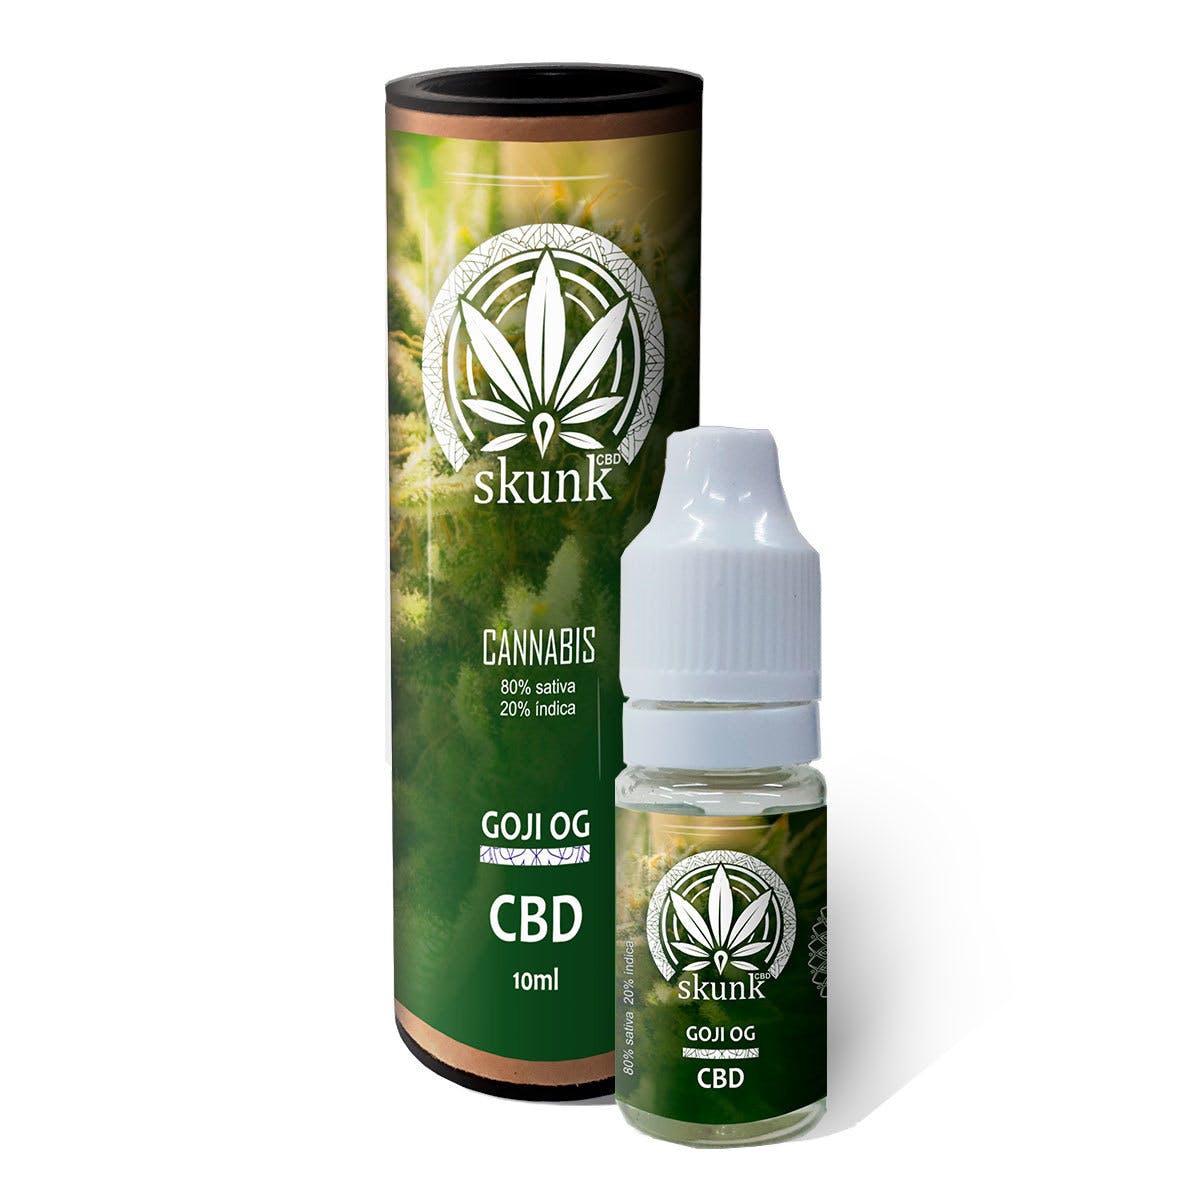 marijuana-dispensaries-mile-high-green-cross-recreational-in-denver-goji-og